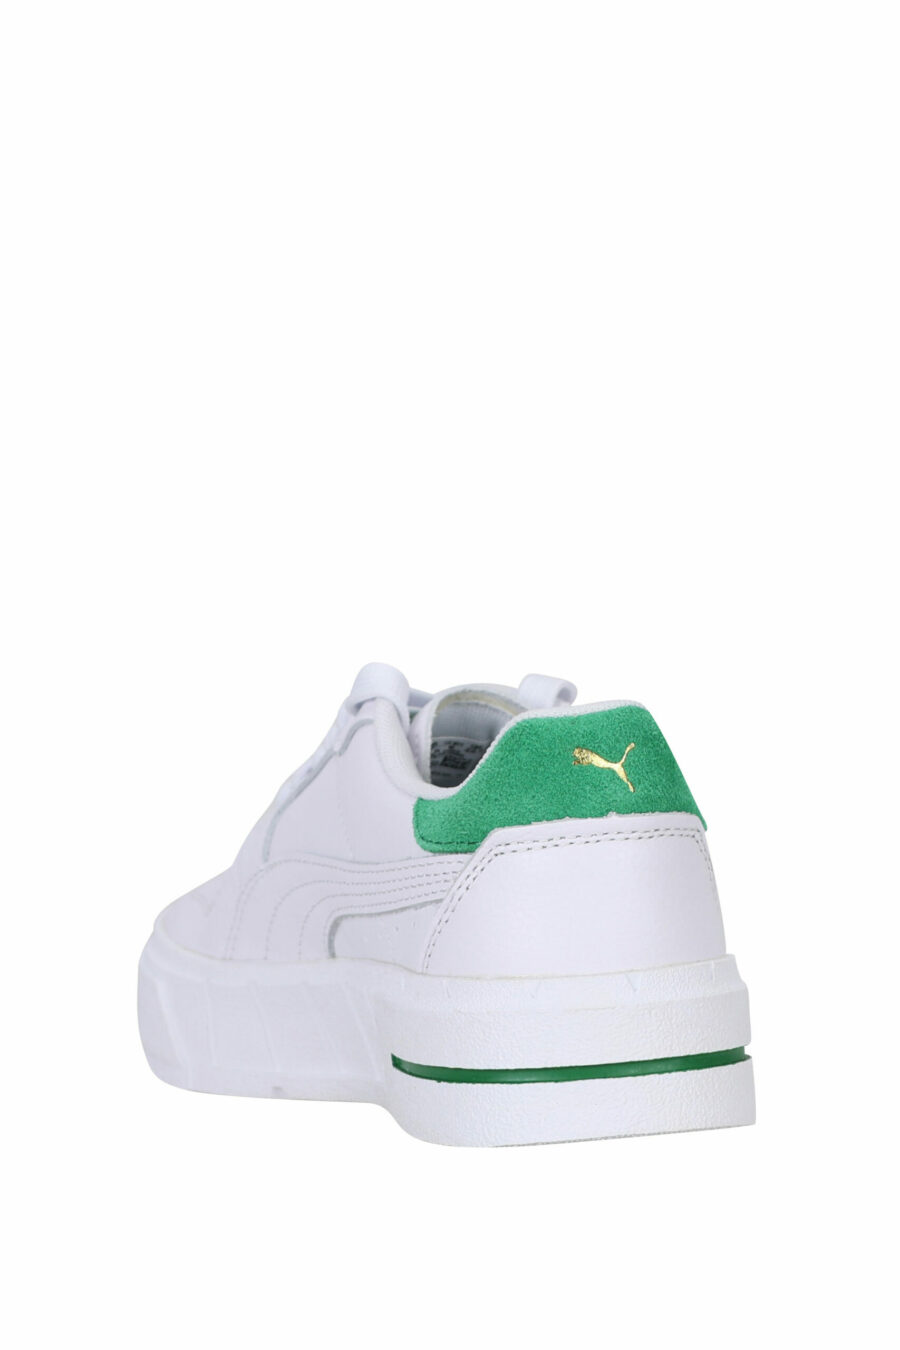 Zapatillas blancas con verde "cali court" - 4065454941770 3 scaled